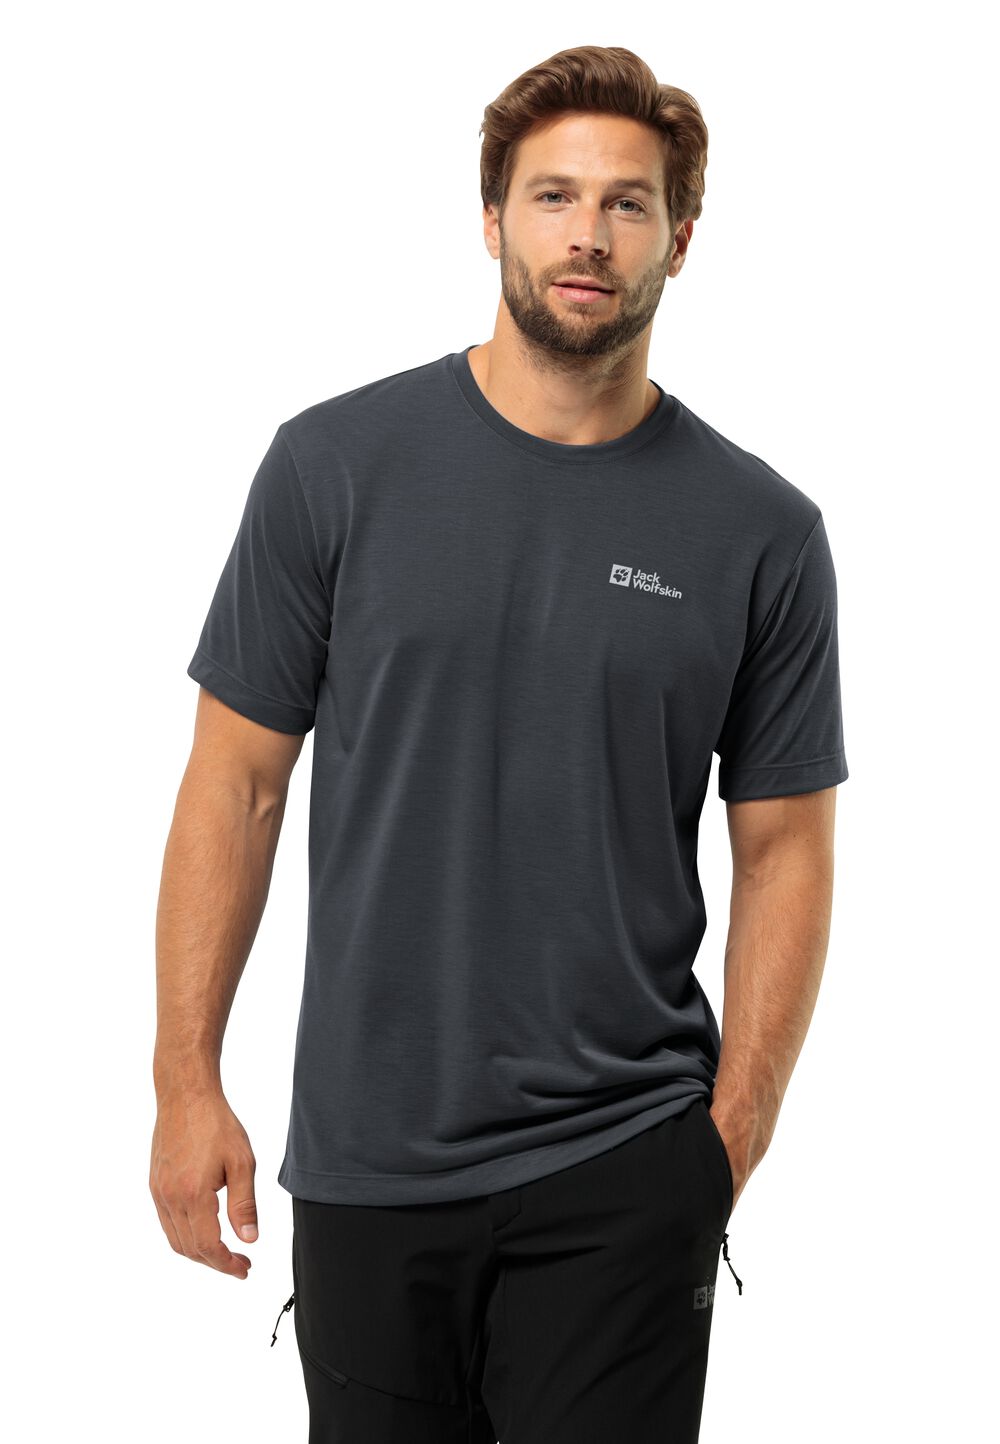 Jack Wolfskin Vonnan S S T-Shirt Men Functioneel shirt Heren XL phantom